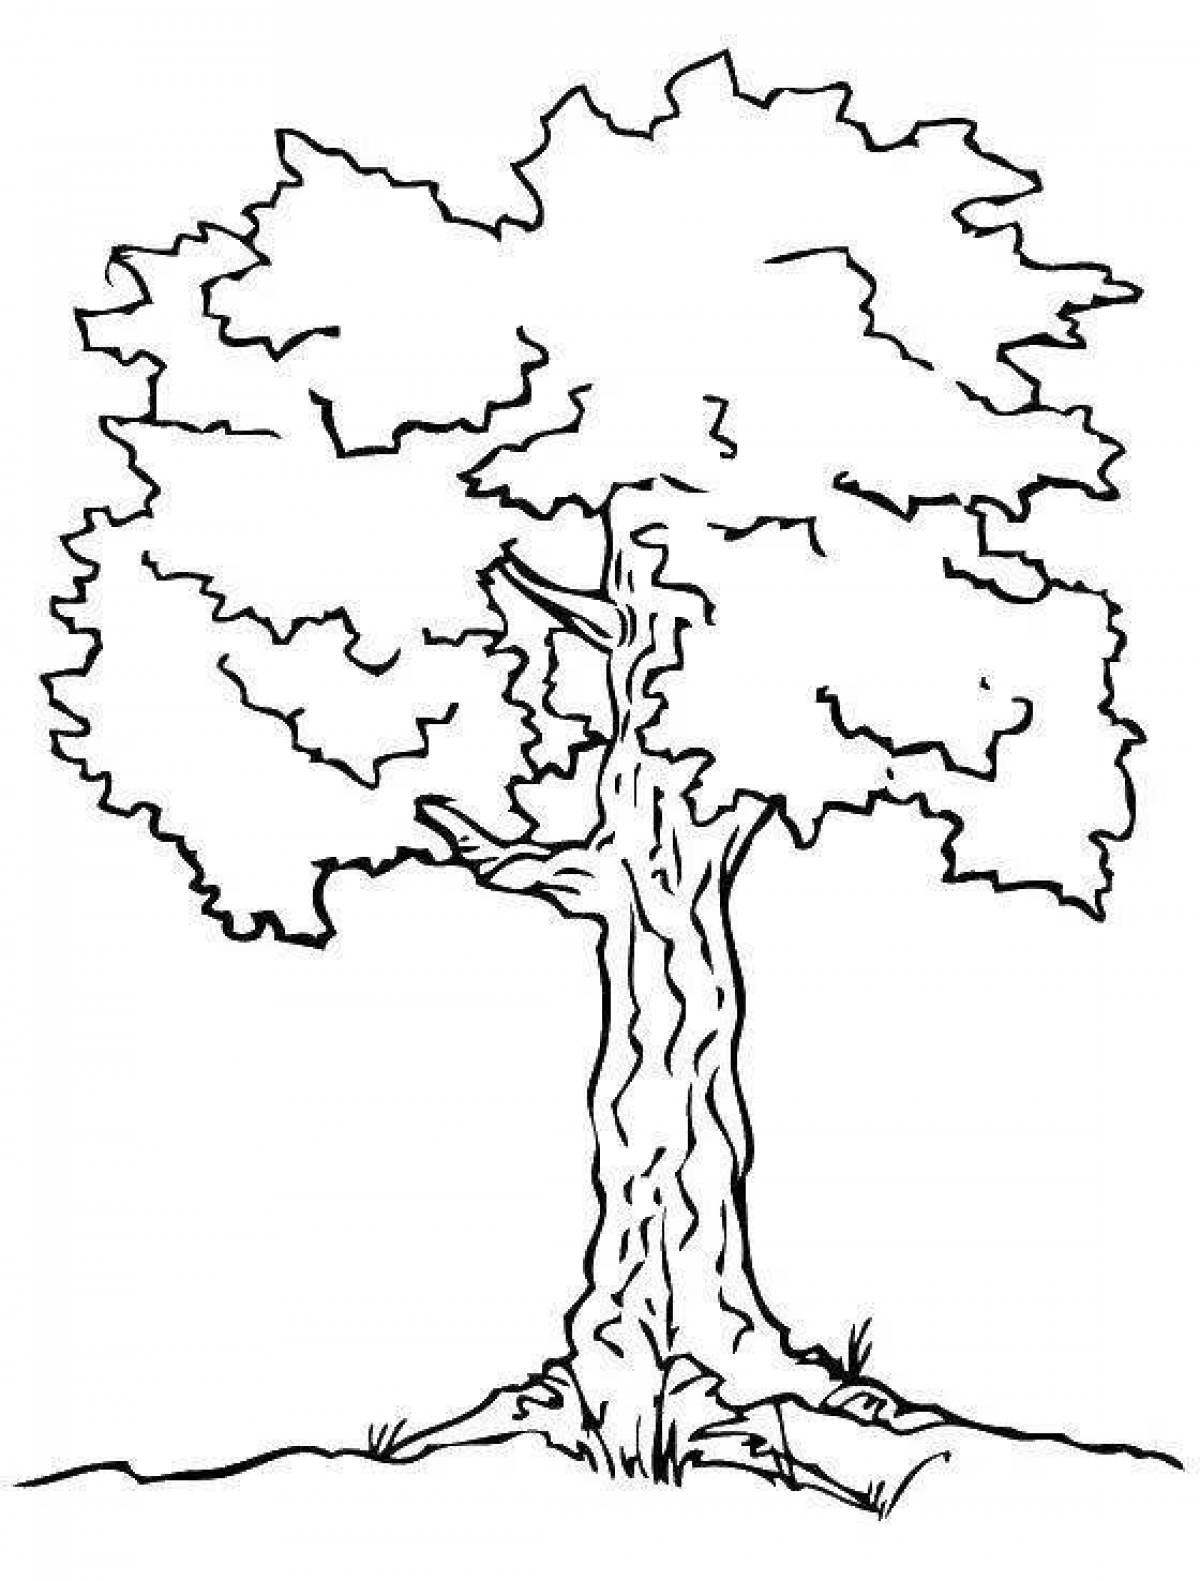 Дерево контур